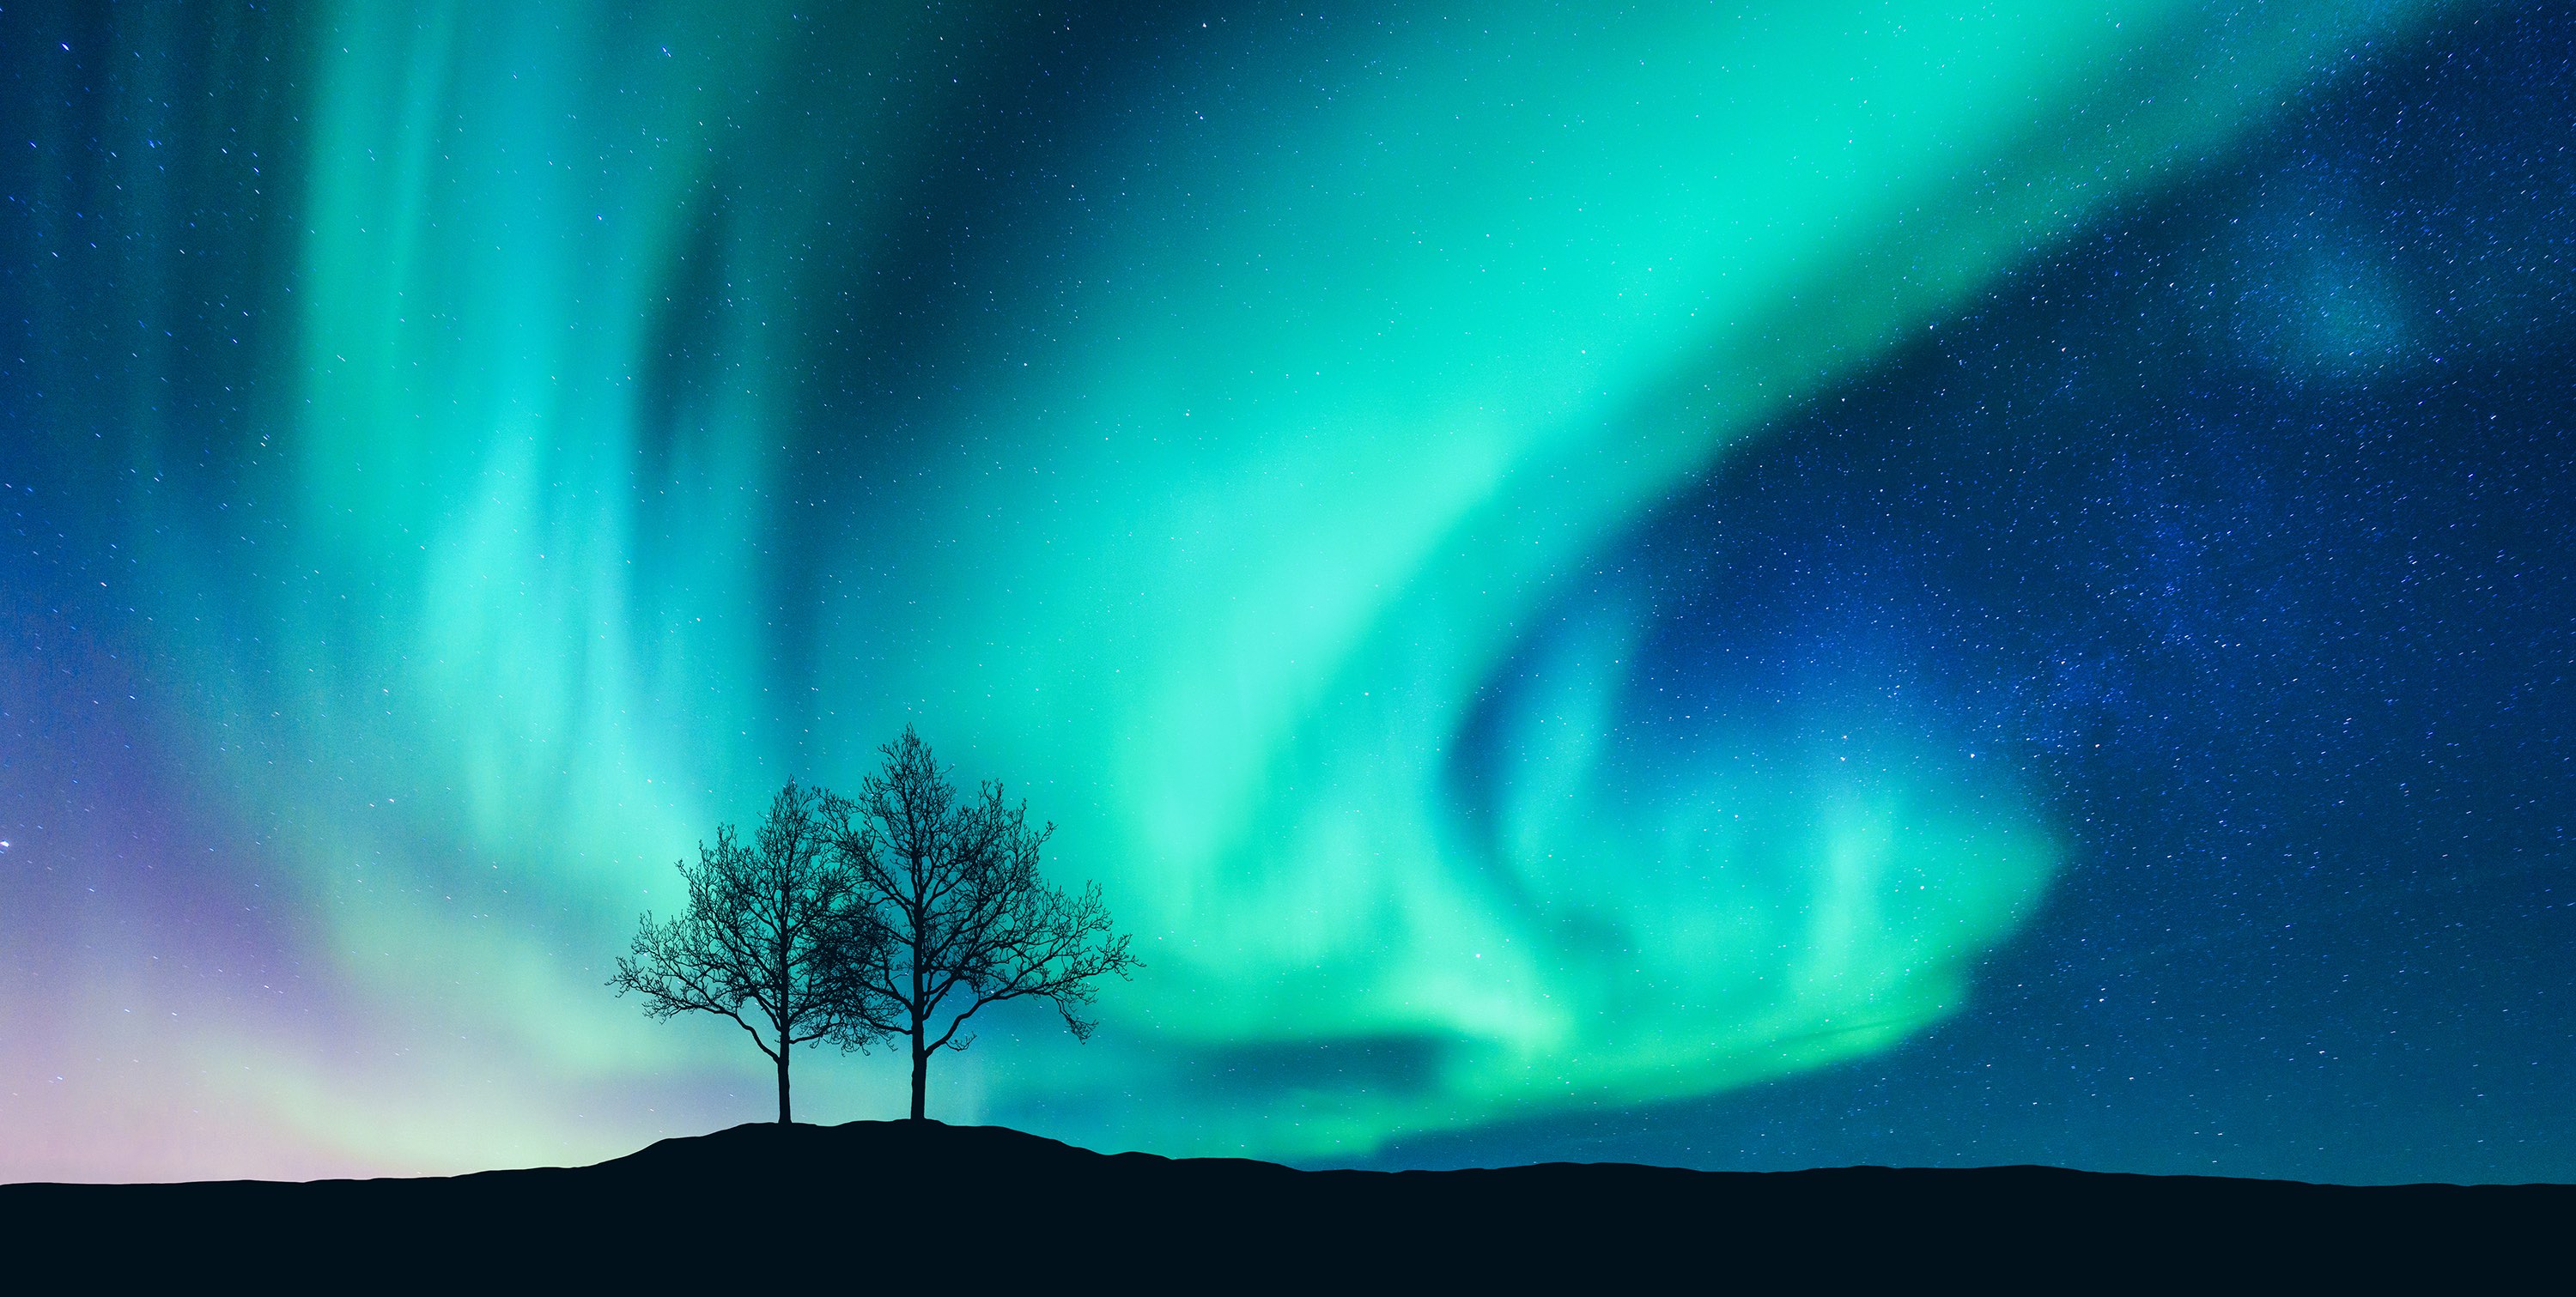 Aurora borealis (Northern Lights).